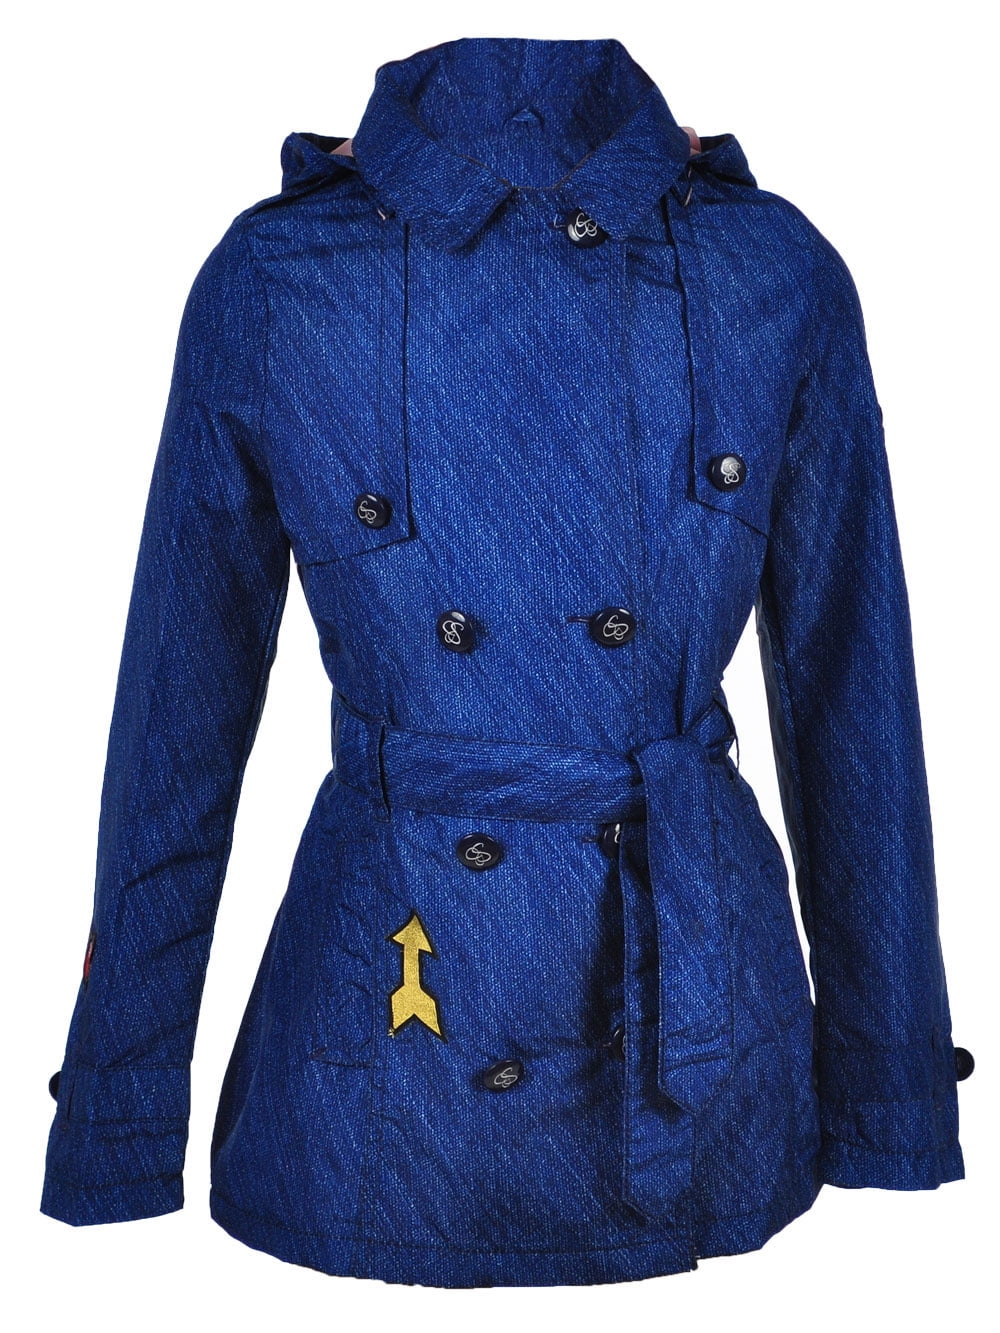 Jessica Simpson Girls' Dress Coat Jacket with Cozy Collar 